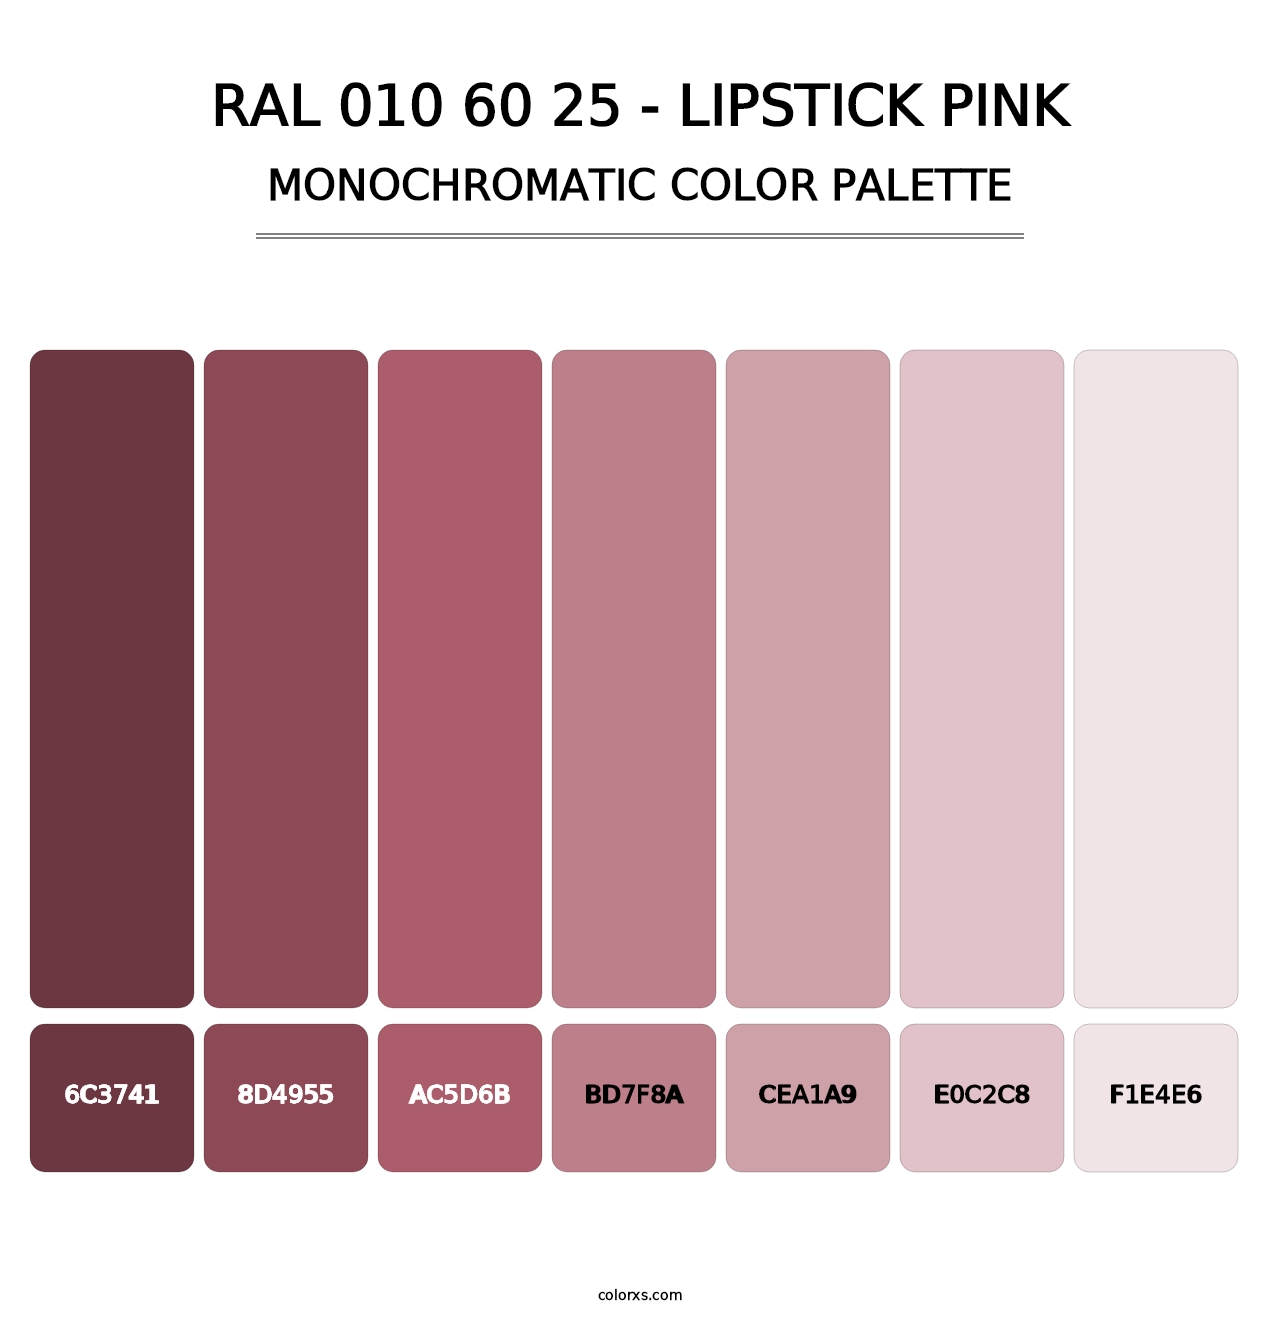 RAL 010 60 25 - Lipstick Pink - Monochromatic Color Palette